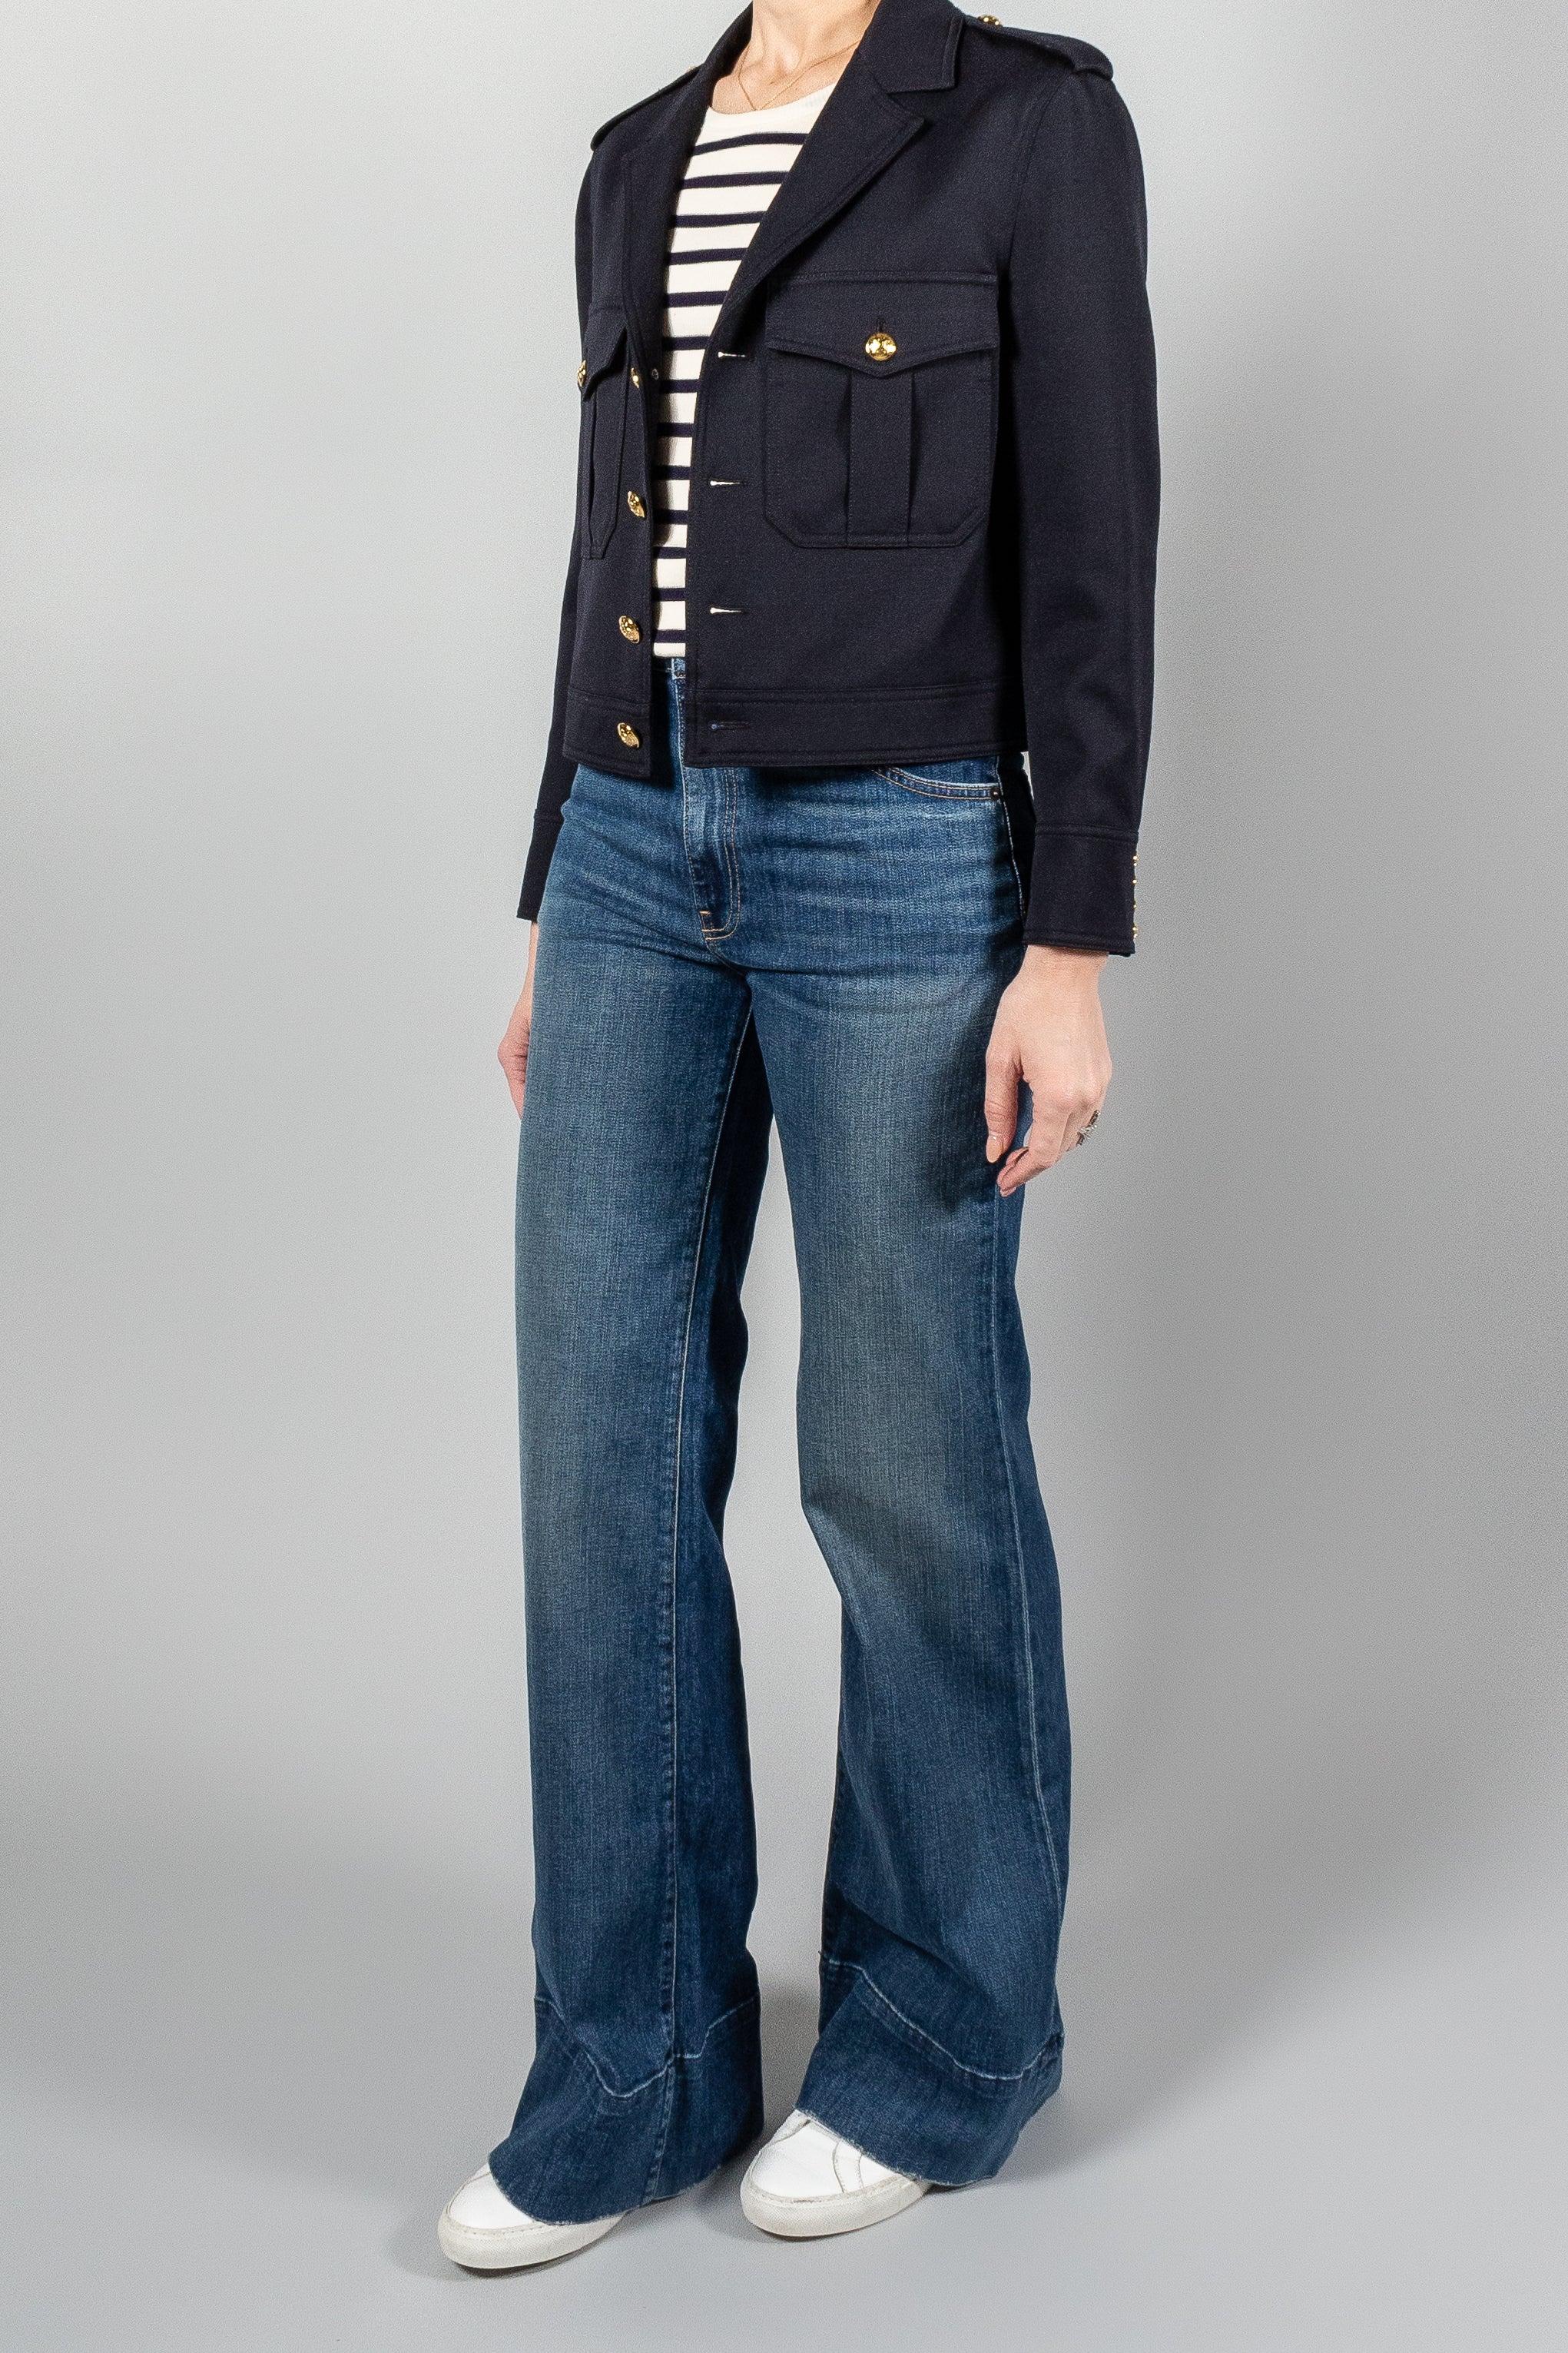 Nili Lotan Lourdes Cropped Military Blazer-Jackets and Blazers-Misch-Boutique-Vancouver-Canada-misch.ca